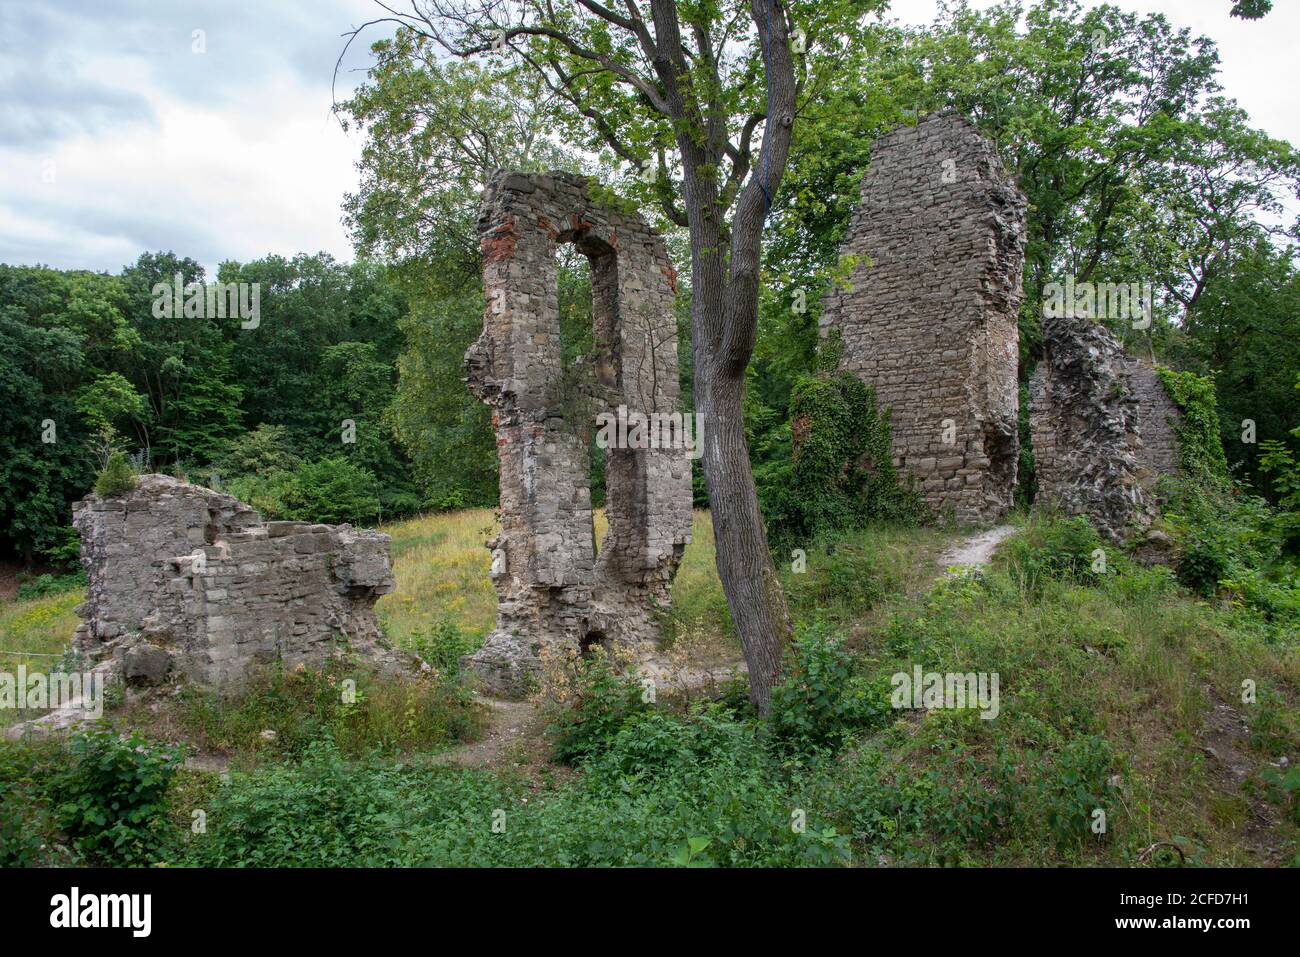 Germania, Sassonia-Anhalt, Stecklenberg, rovine del castello medievale di Stecklenburg nei monti Harz. Foto Stock